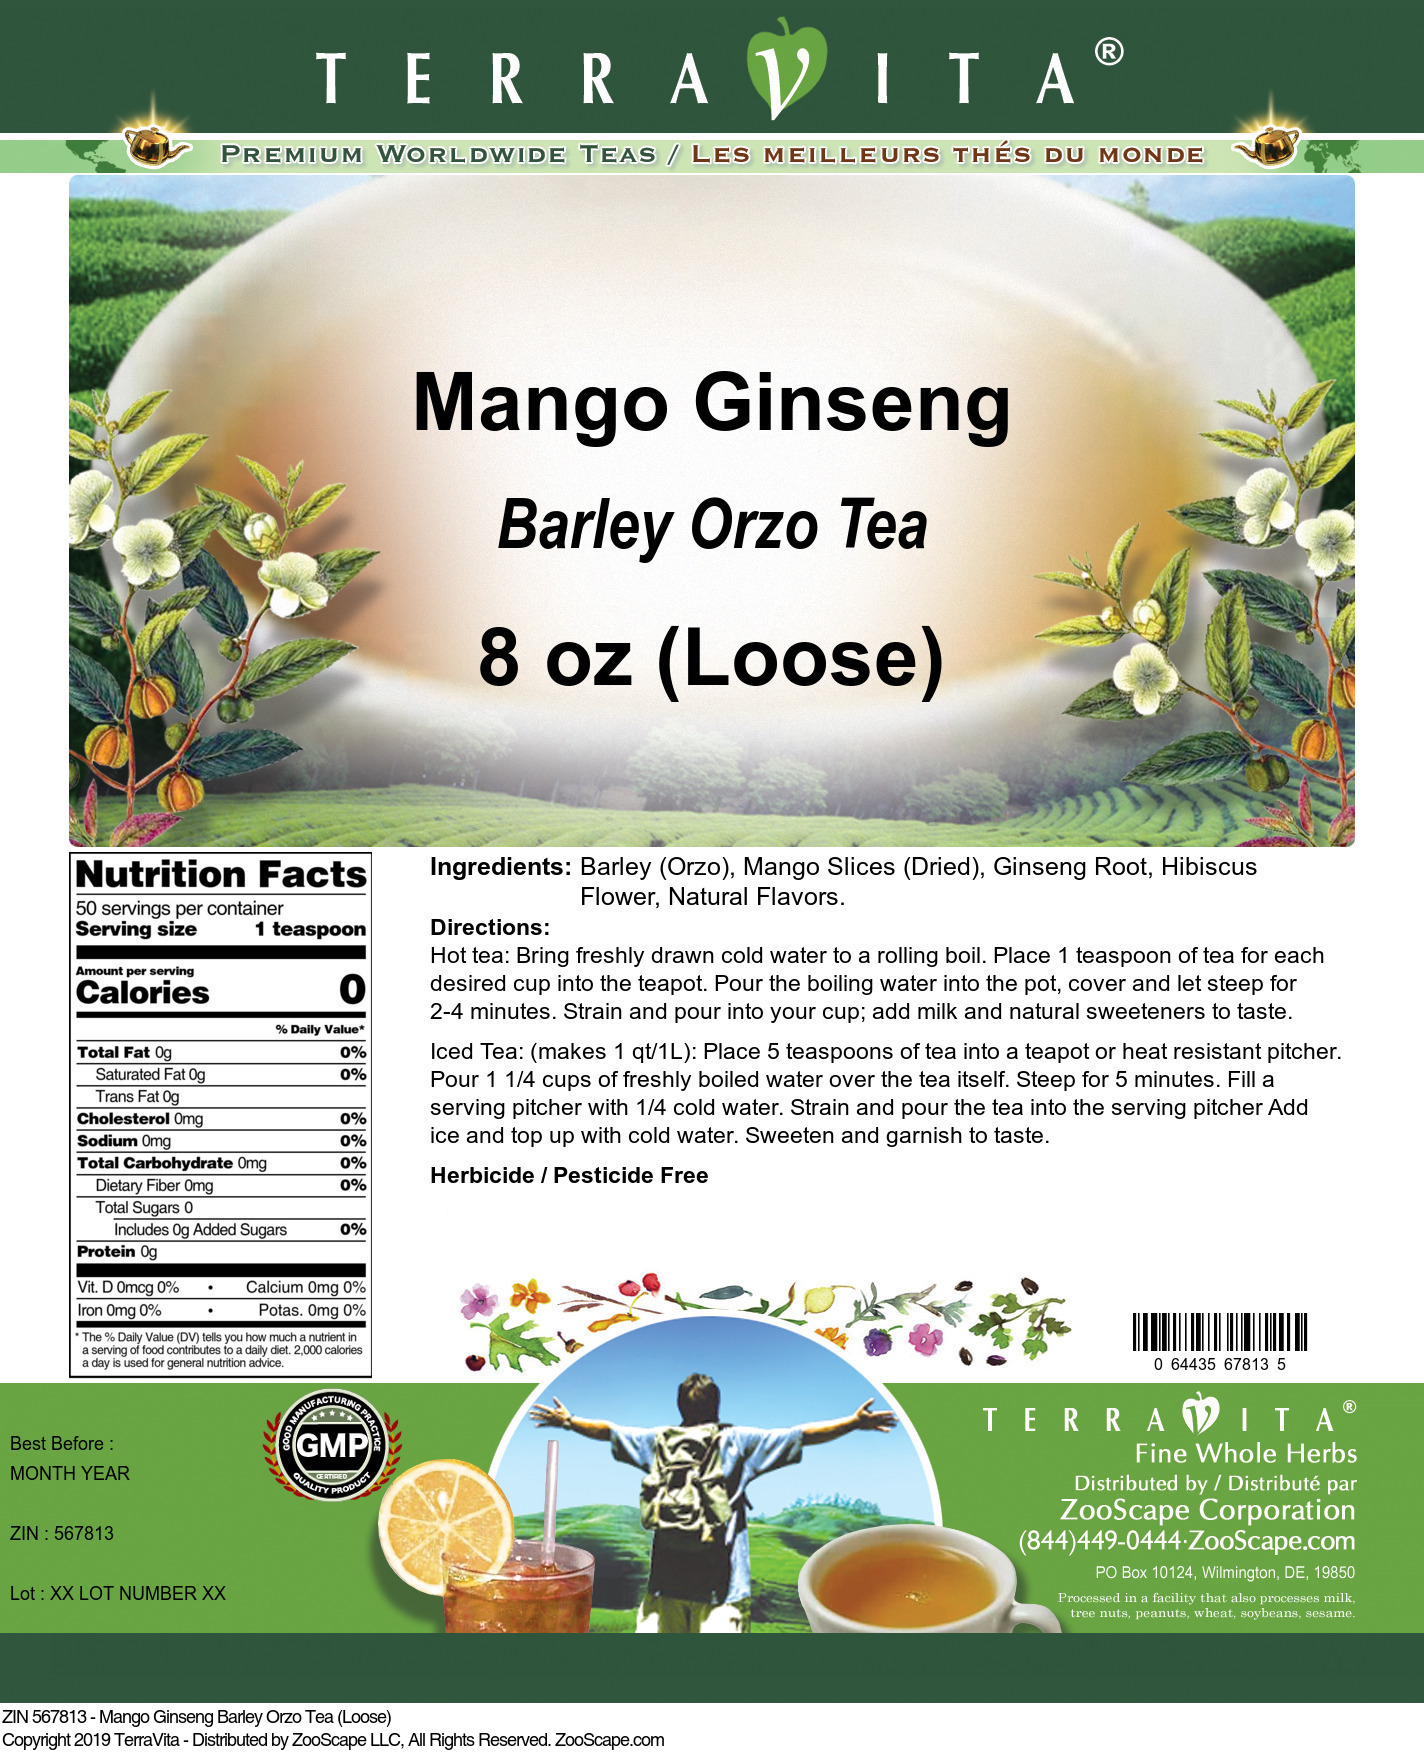 Mango Ginseng Barley Orzo Tea (Loose) - Label